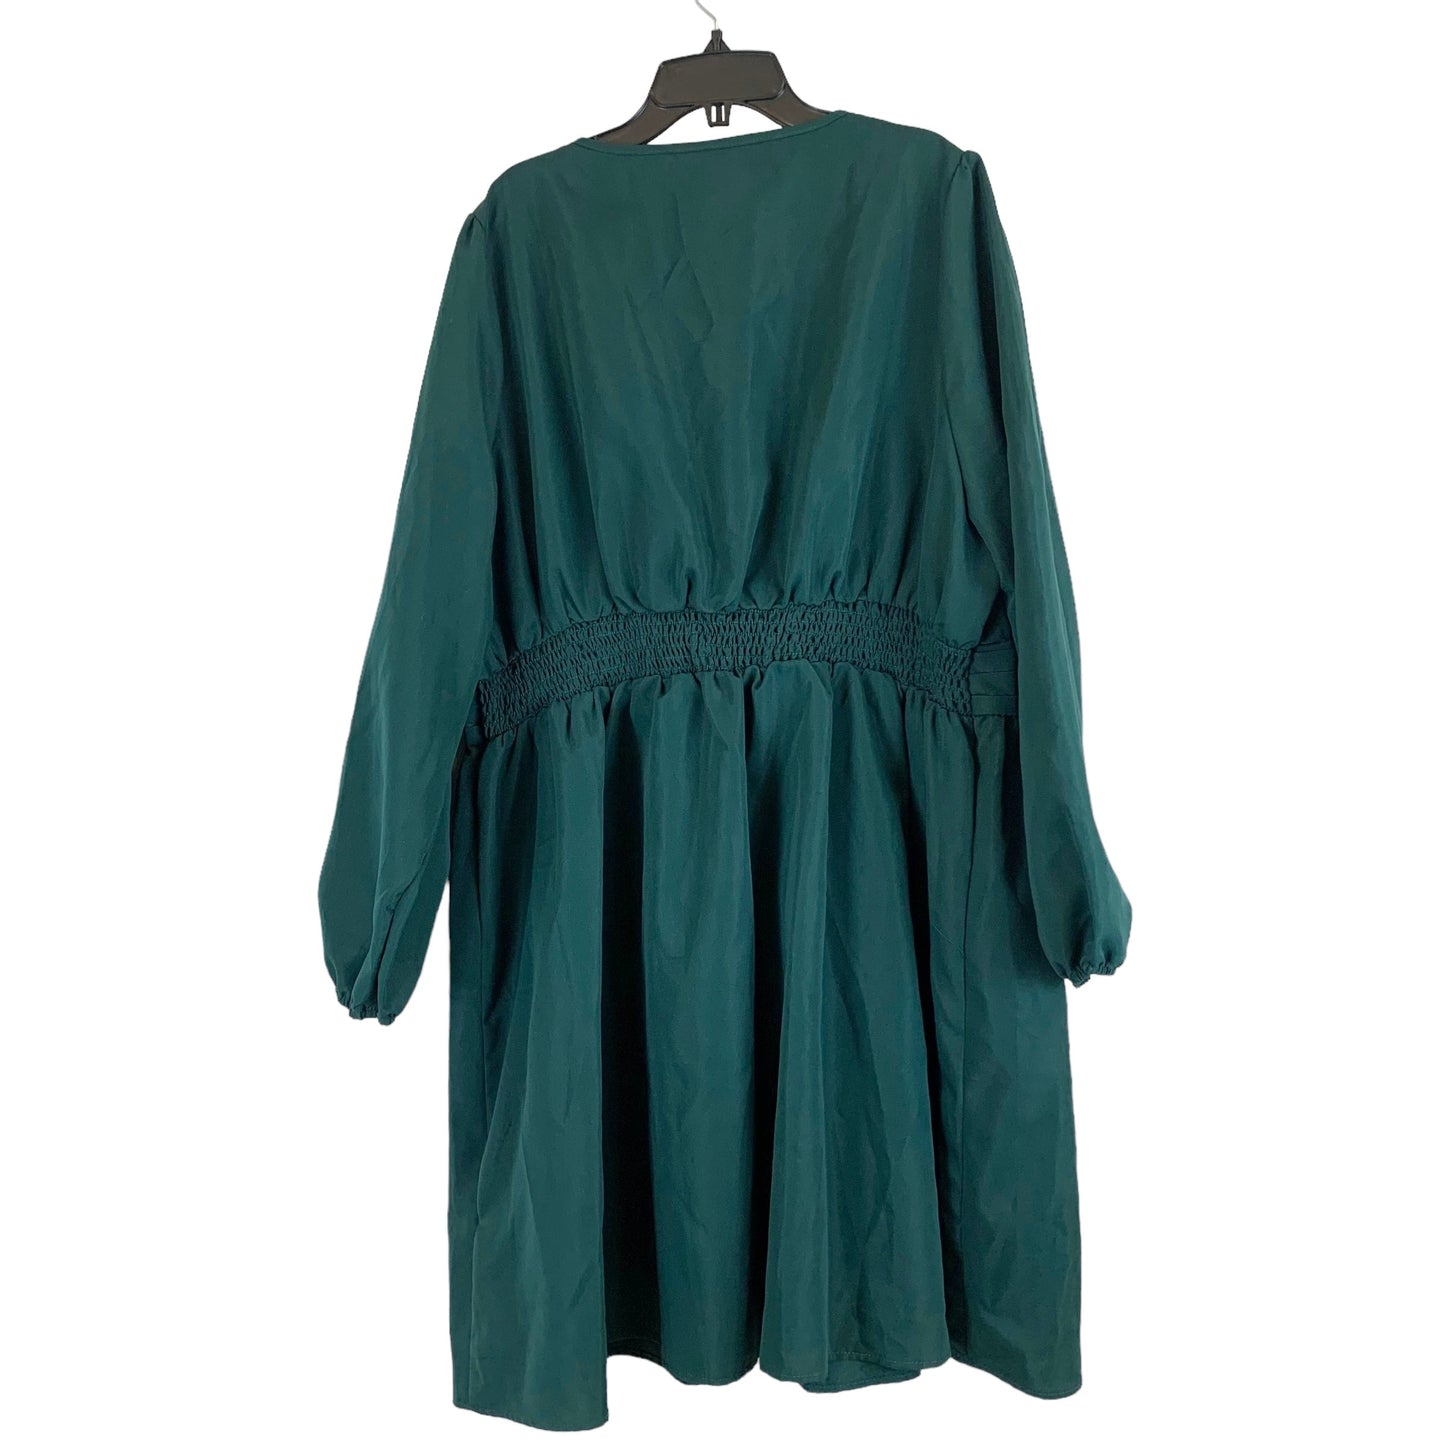 Green Dress Casual Short Shein, Size Xxl